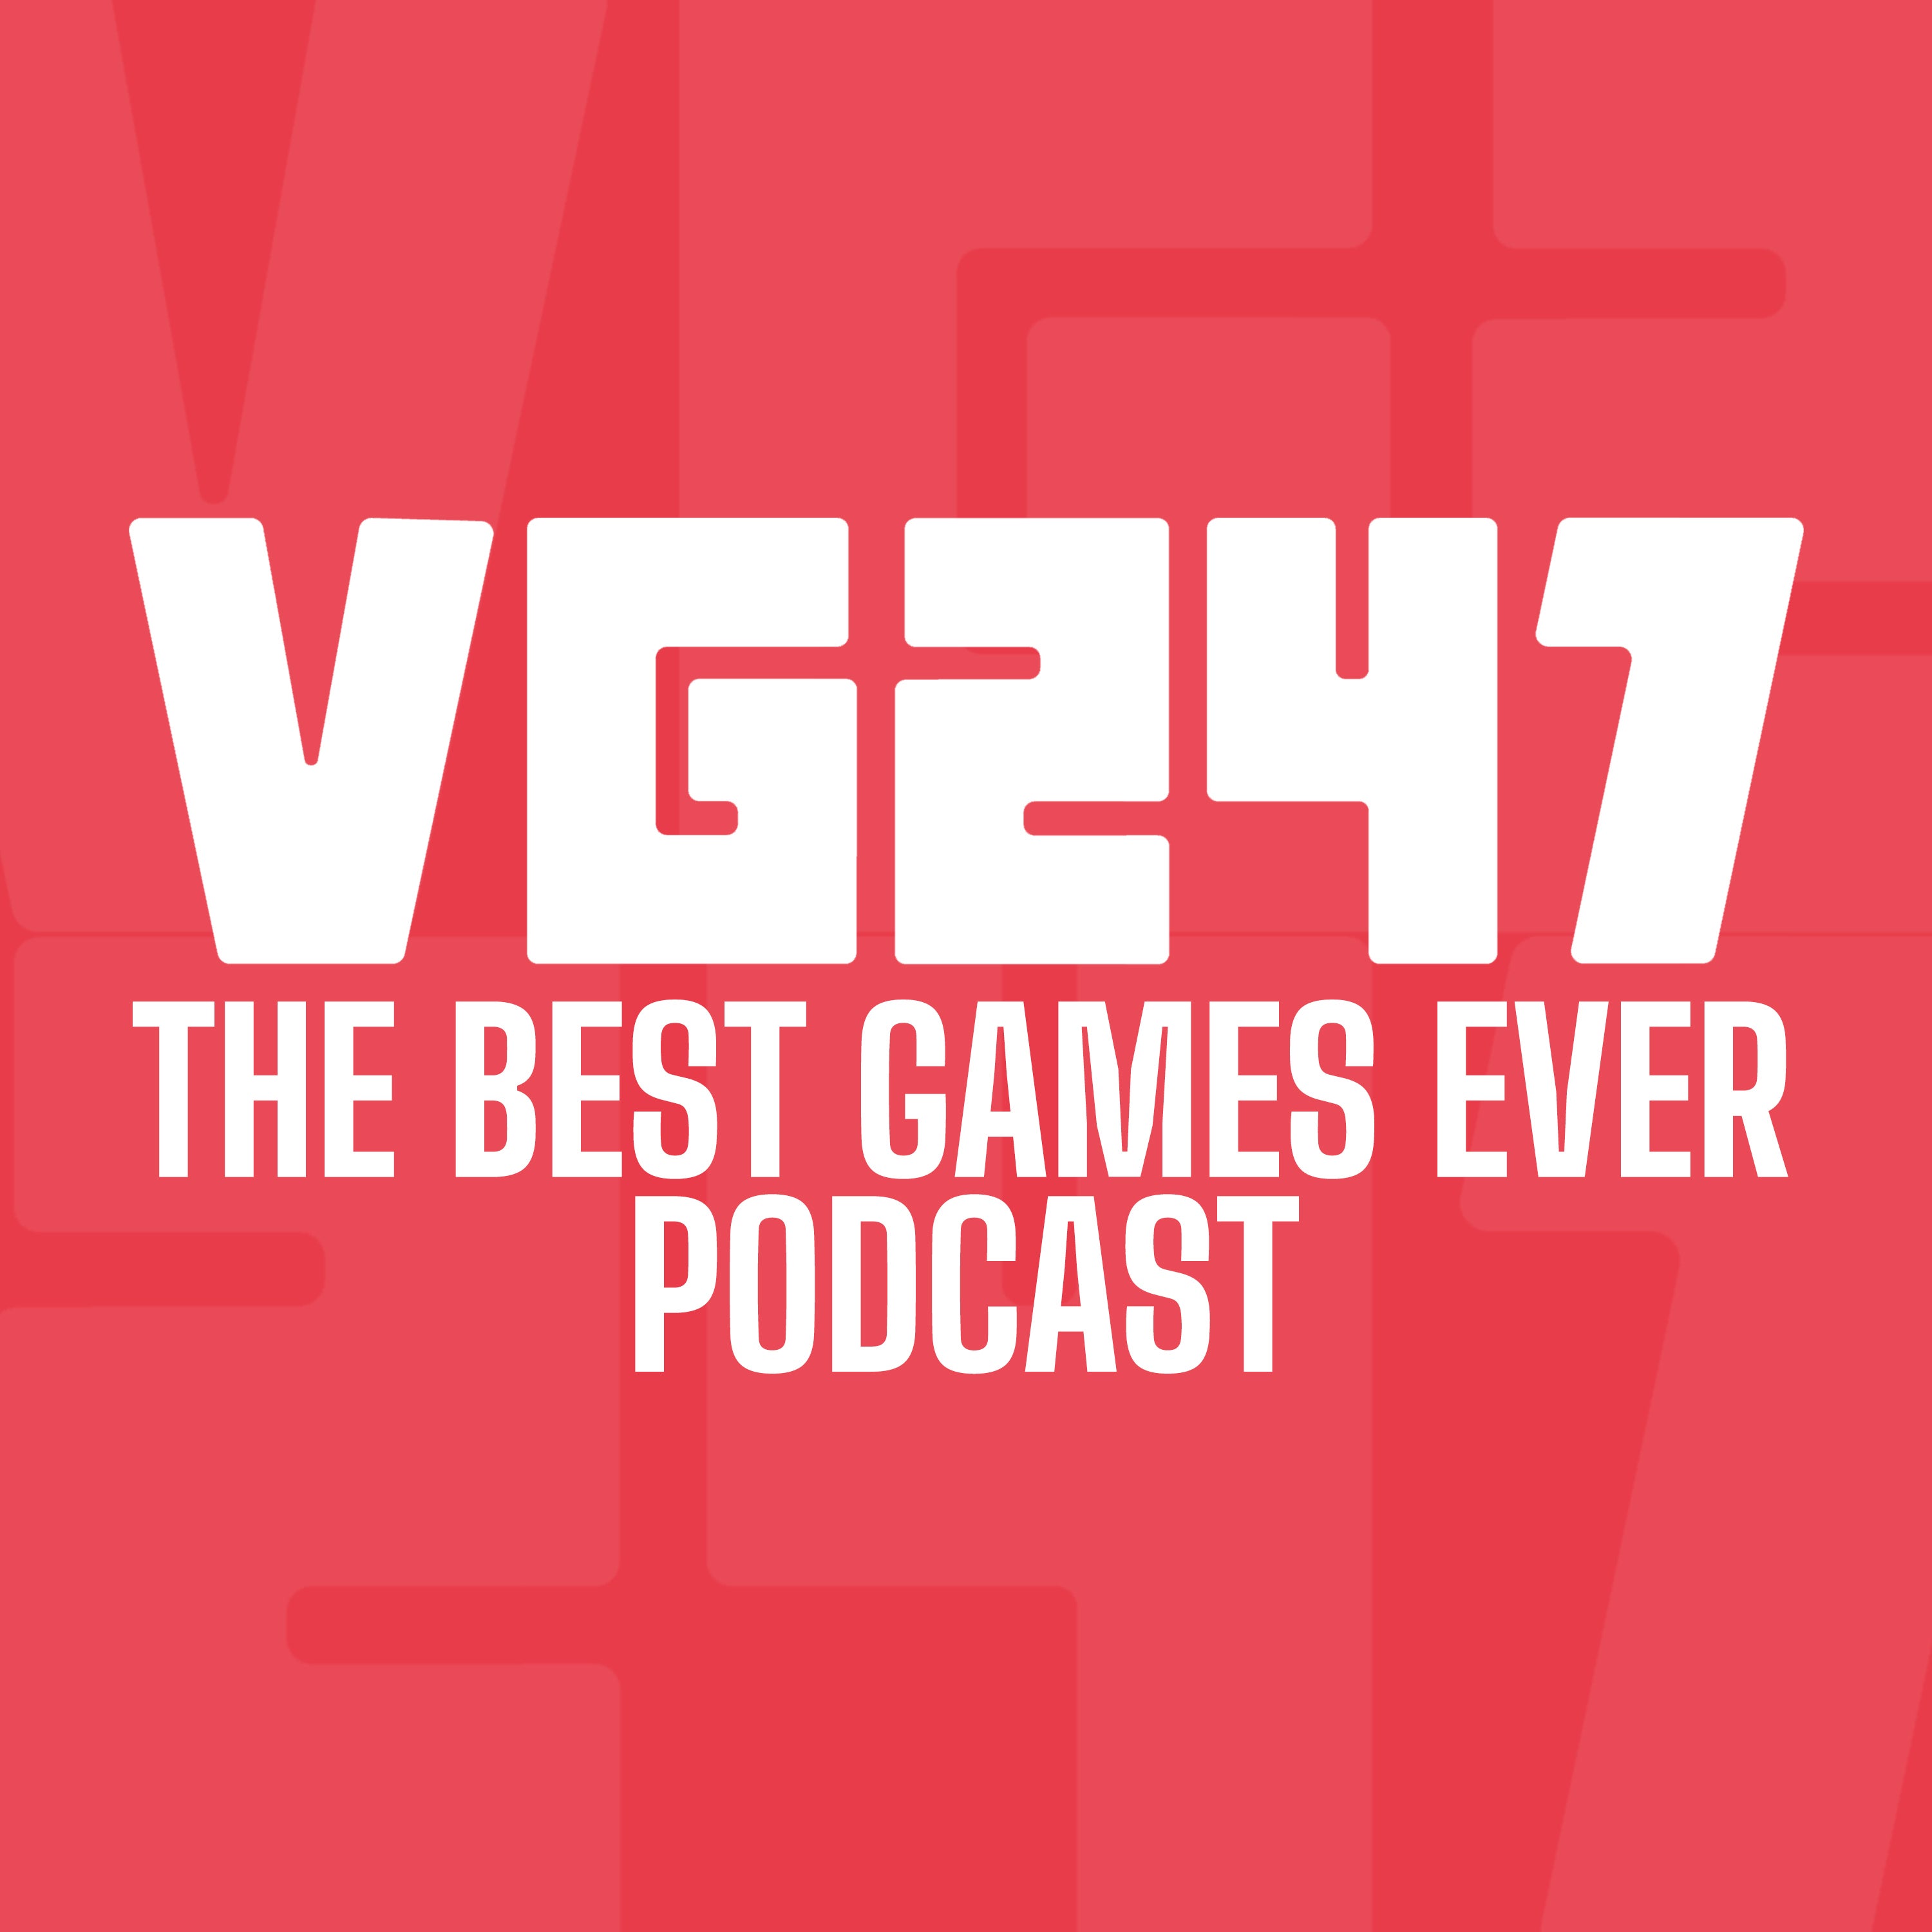 Logotipo para el podcast Best VG247 Games Ever.  Texto blanco sobre fondo rojo.